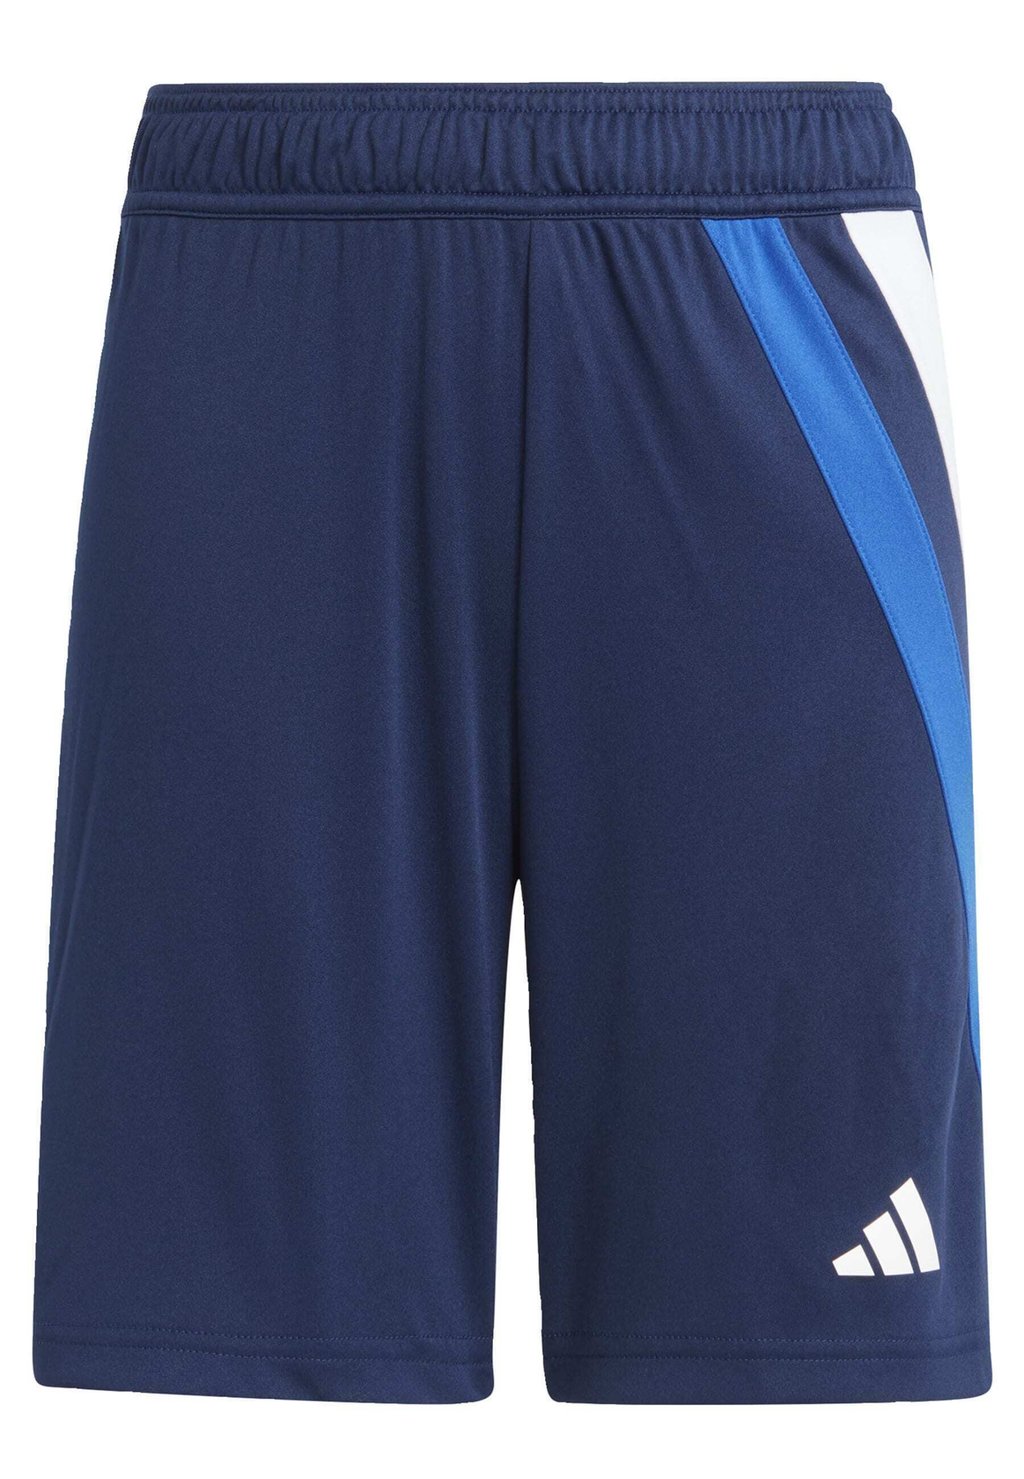 Спортивные шорты Fortore 23 Adidas, цвет team navy blue royal blue white team collegiate red navy blue mist pattern 6 s coffee team